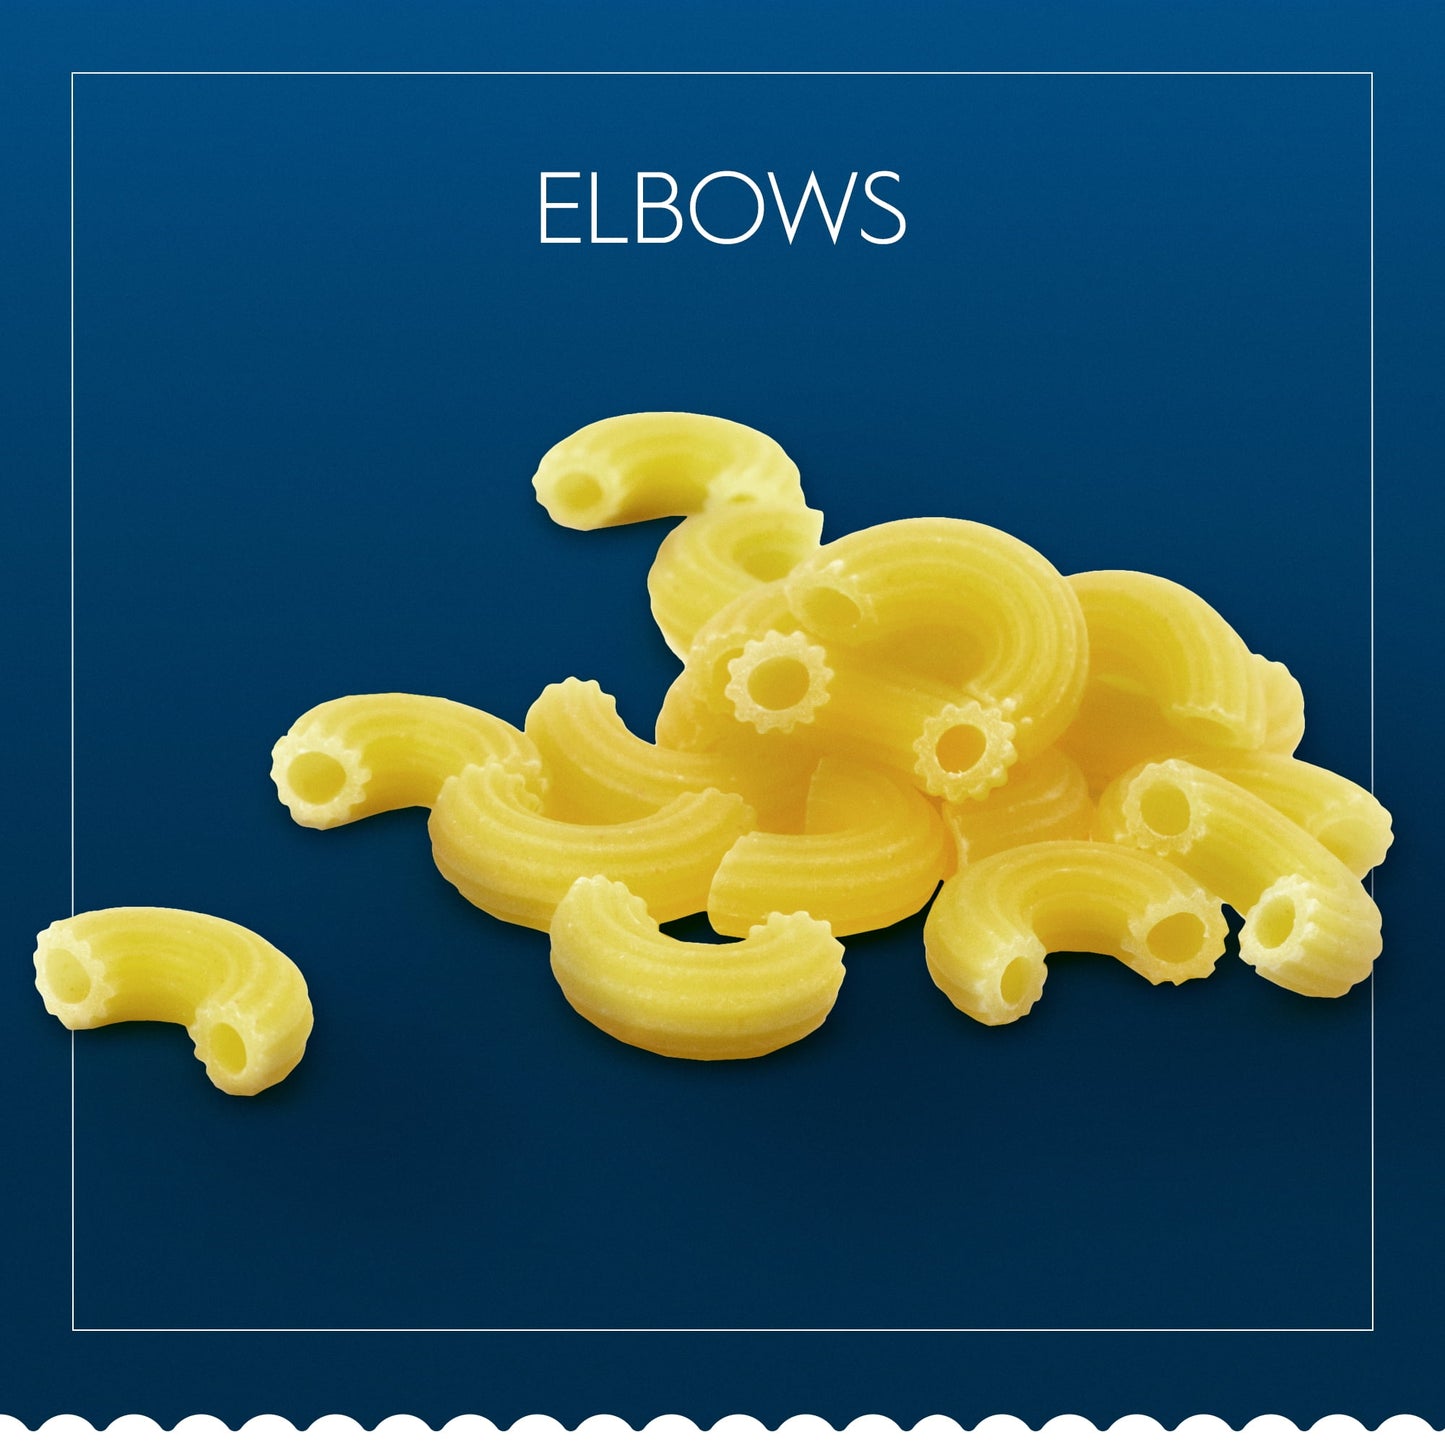 Barilla Classic Elbows Pasta, 32 oz